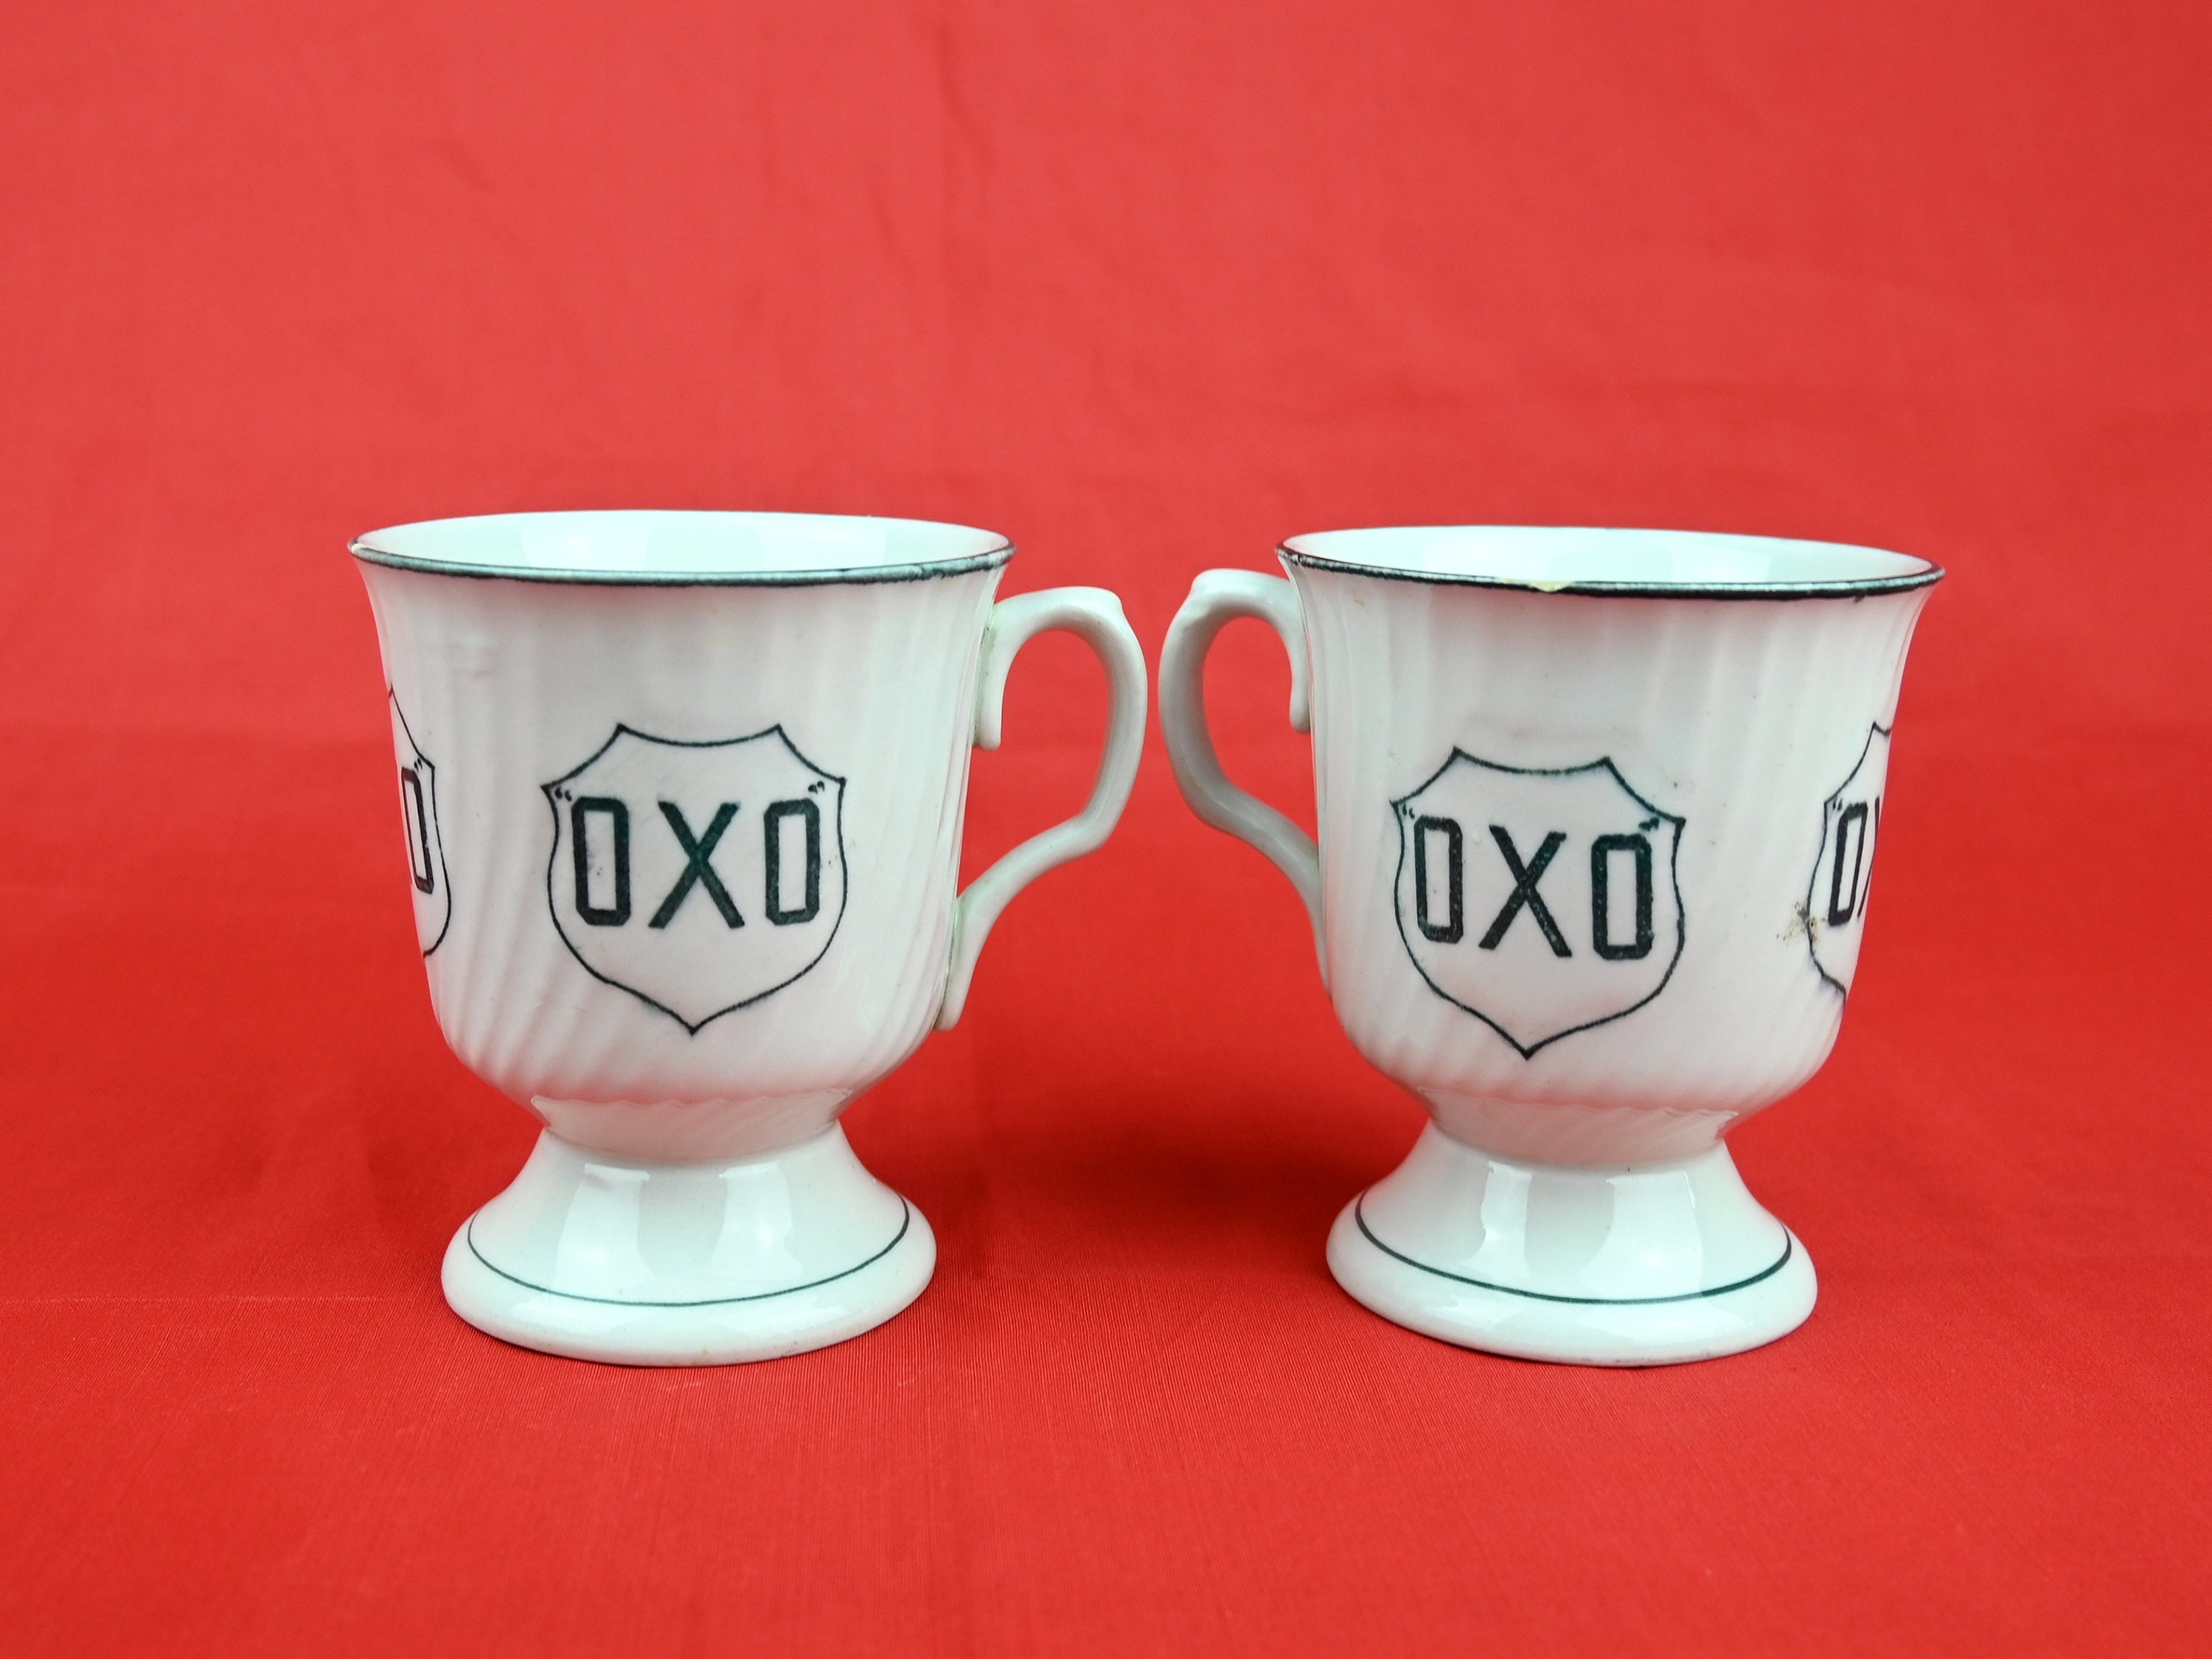 Vintage OXO Mug Collectible Advertising Vintage Memorabilia 